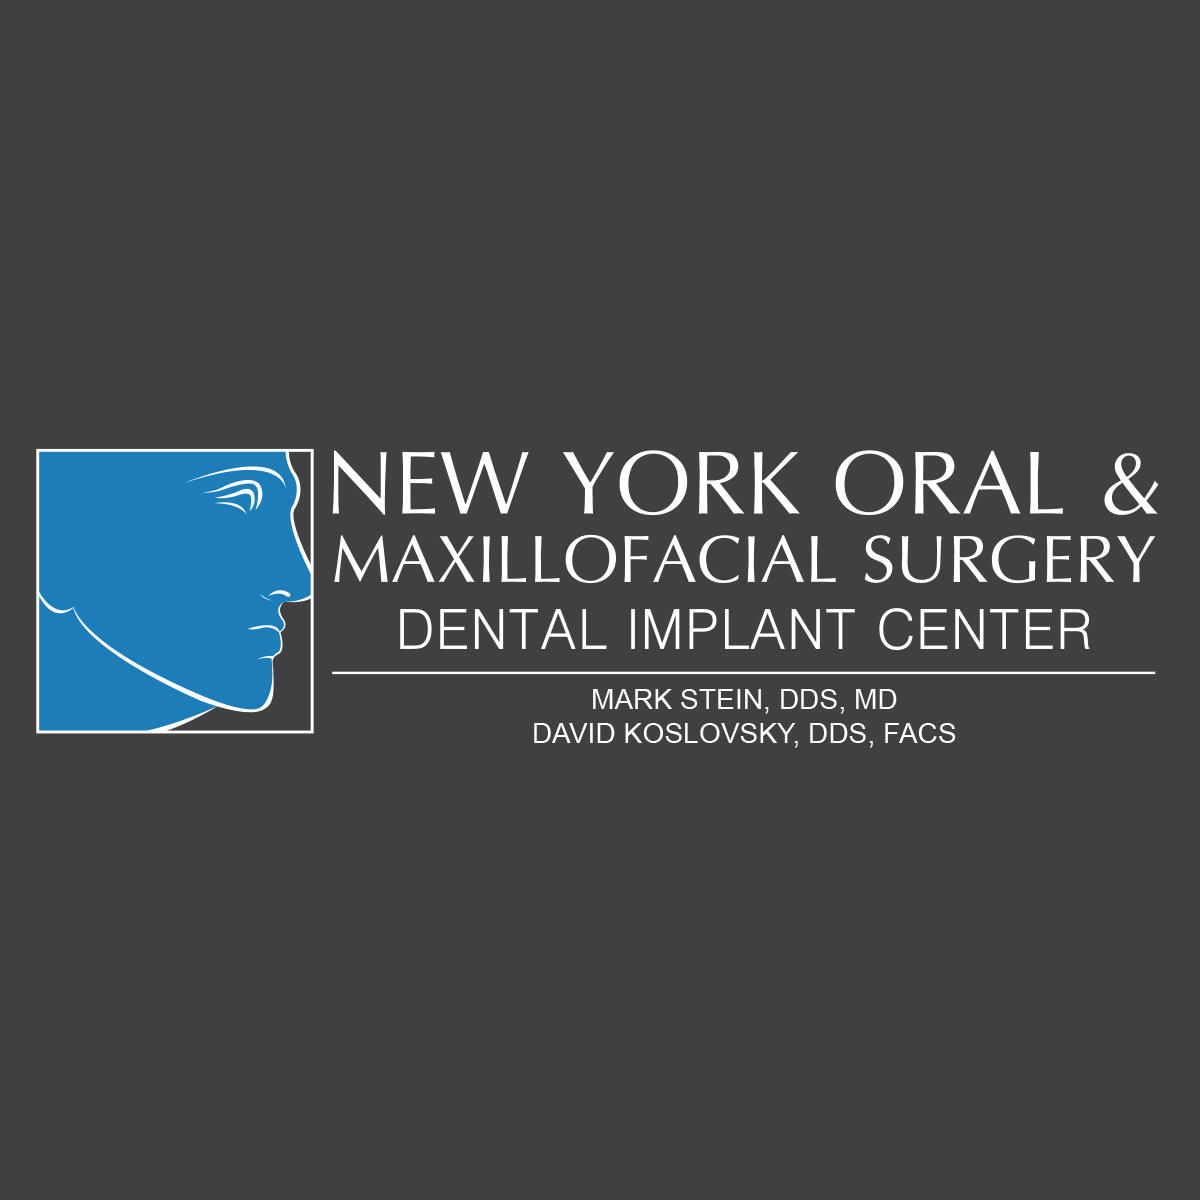 New York Oral & Maxillofacial Surgery Dental Implant Center - New York, NY 10065 - (646)681-7068 | ShowMeLocal.com